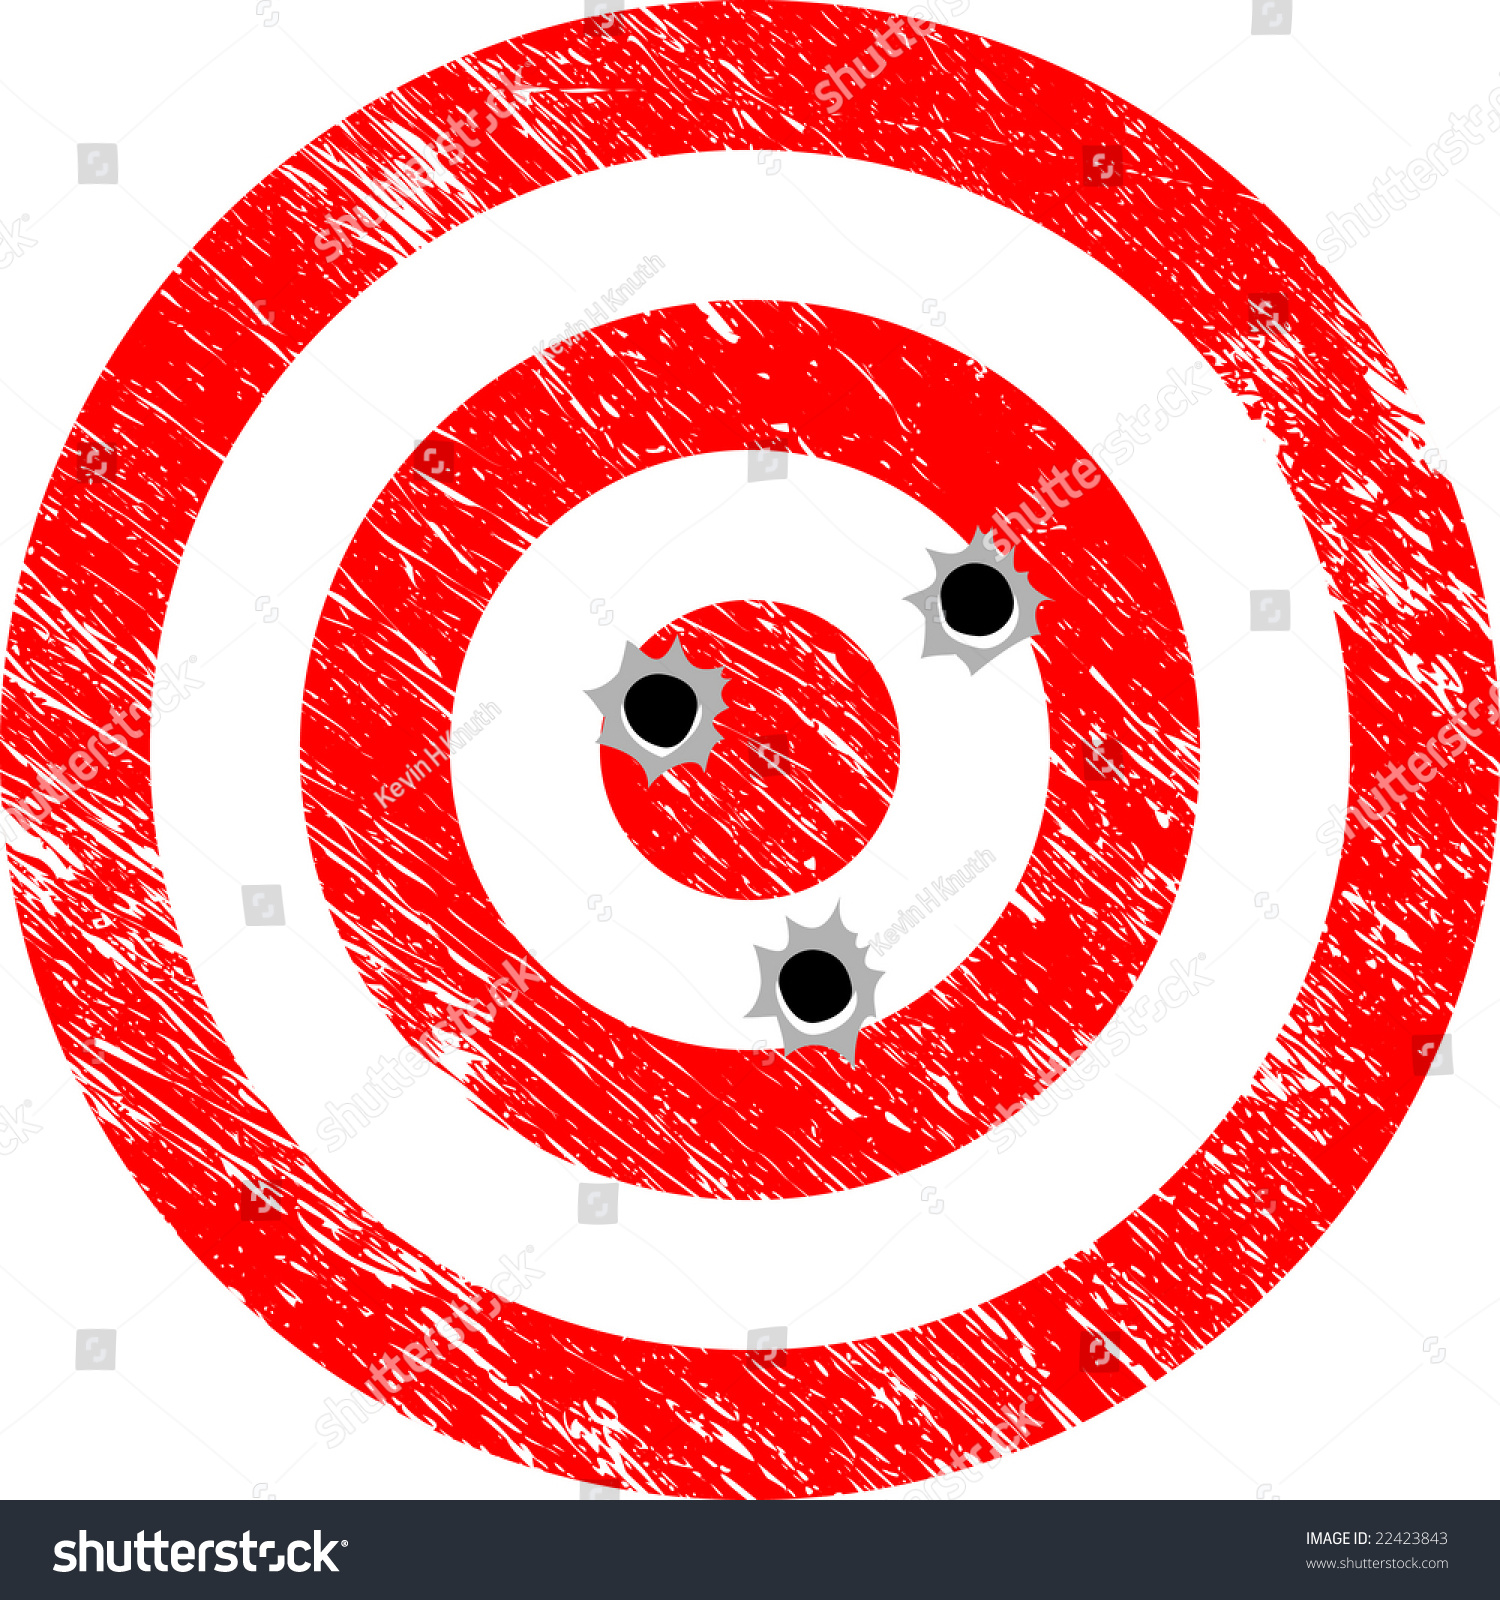 gun target clipart - photo #39